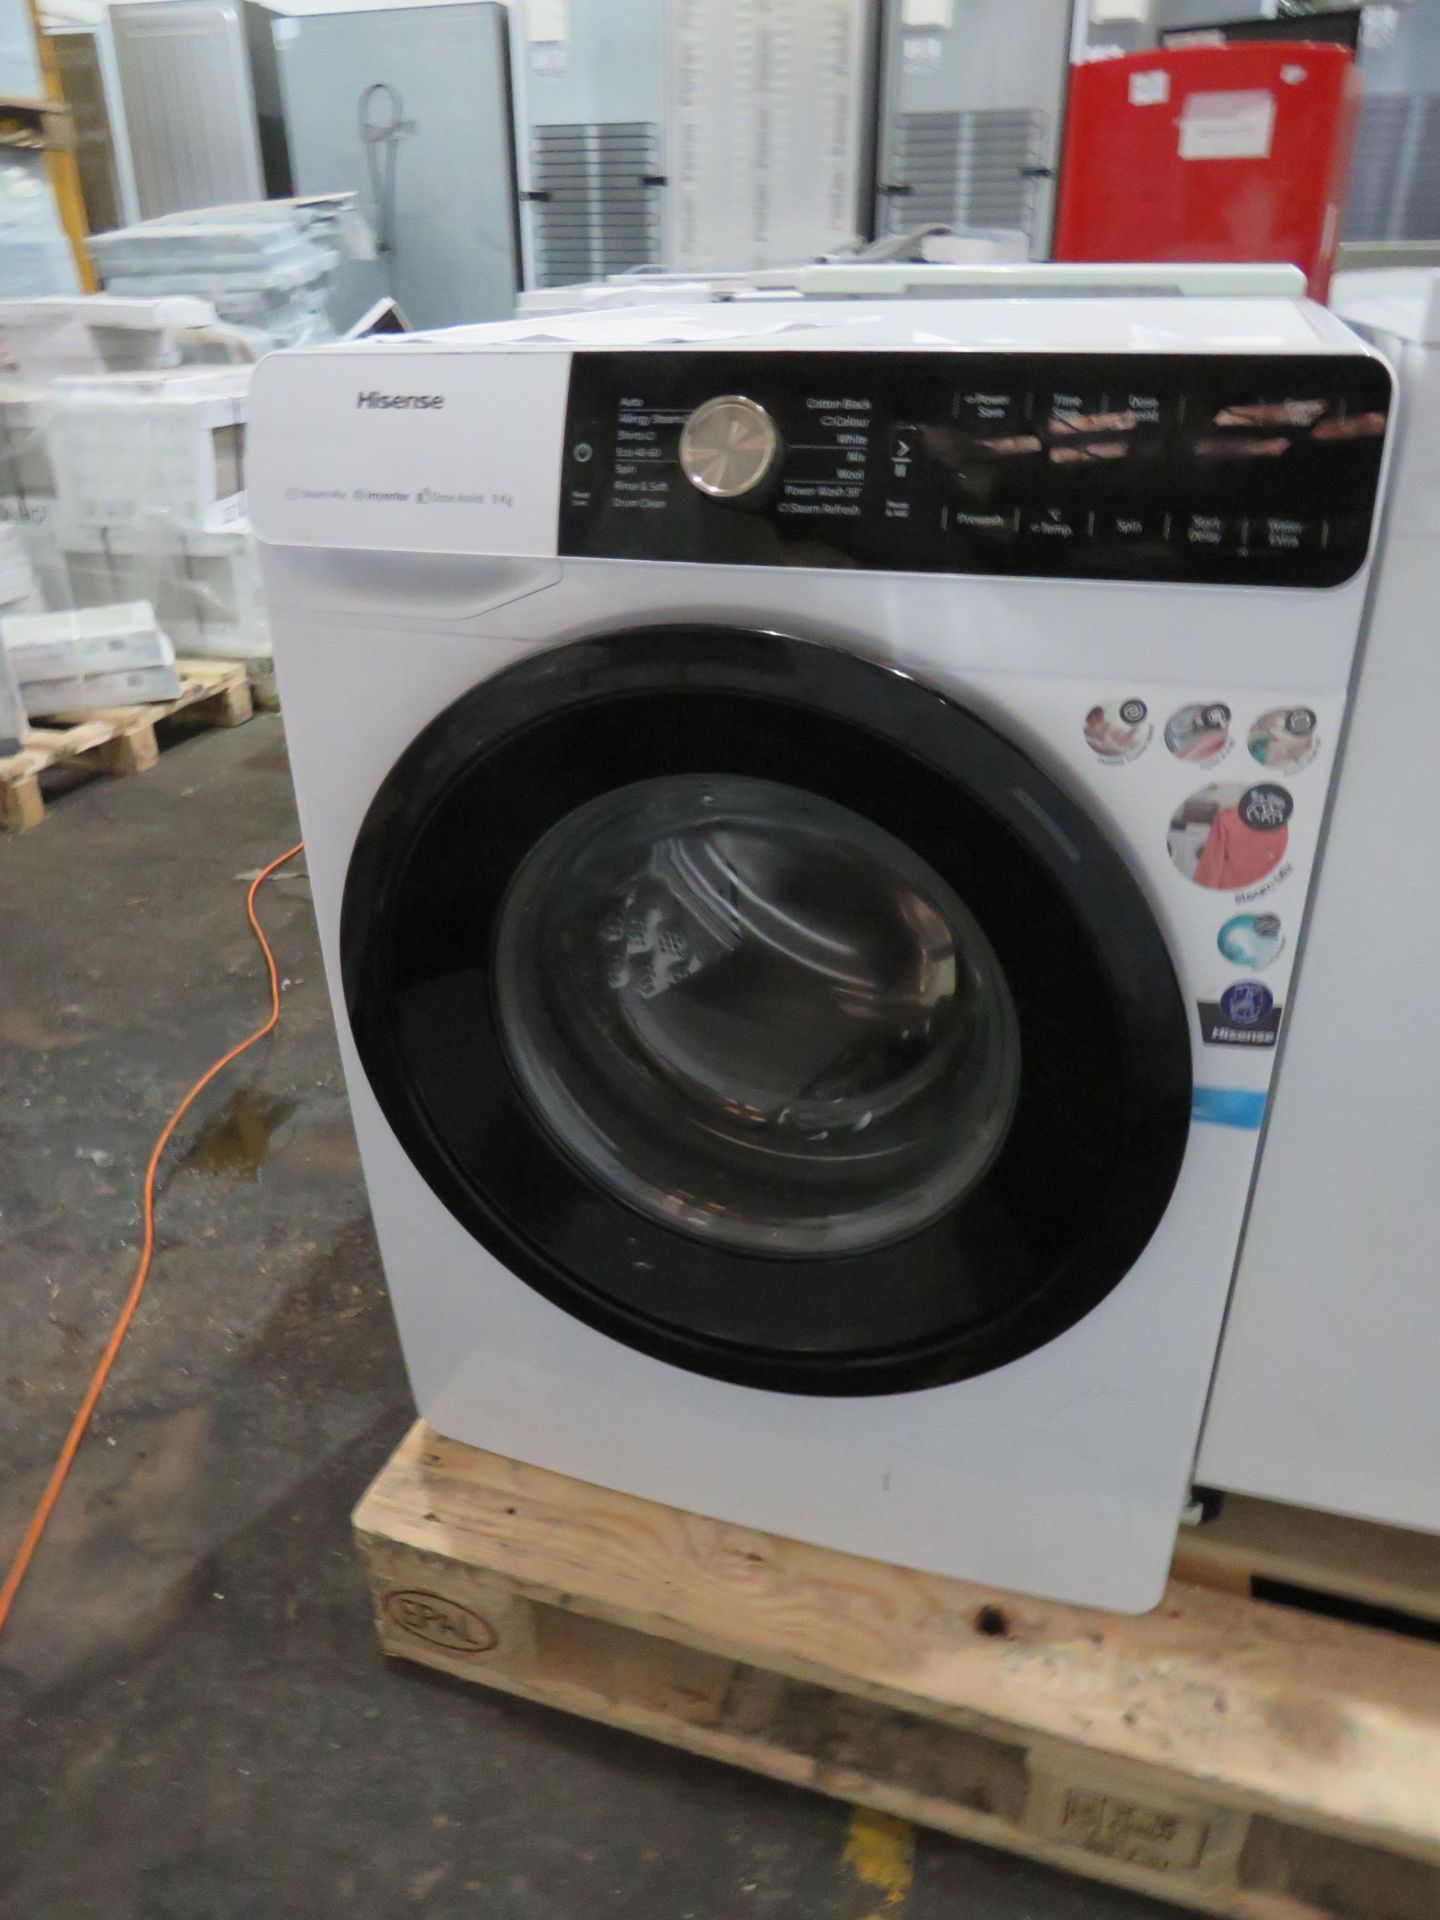 Hisense Black 9KG Washing Machine With 1400RPM, Model: WFGA90141VM - Powers on & Spins.